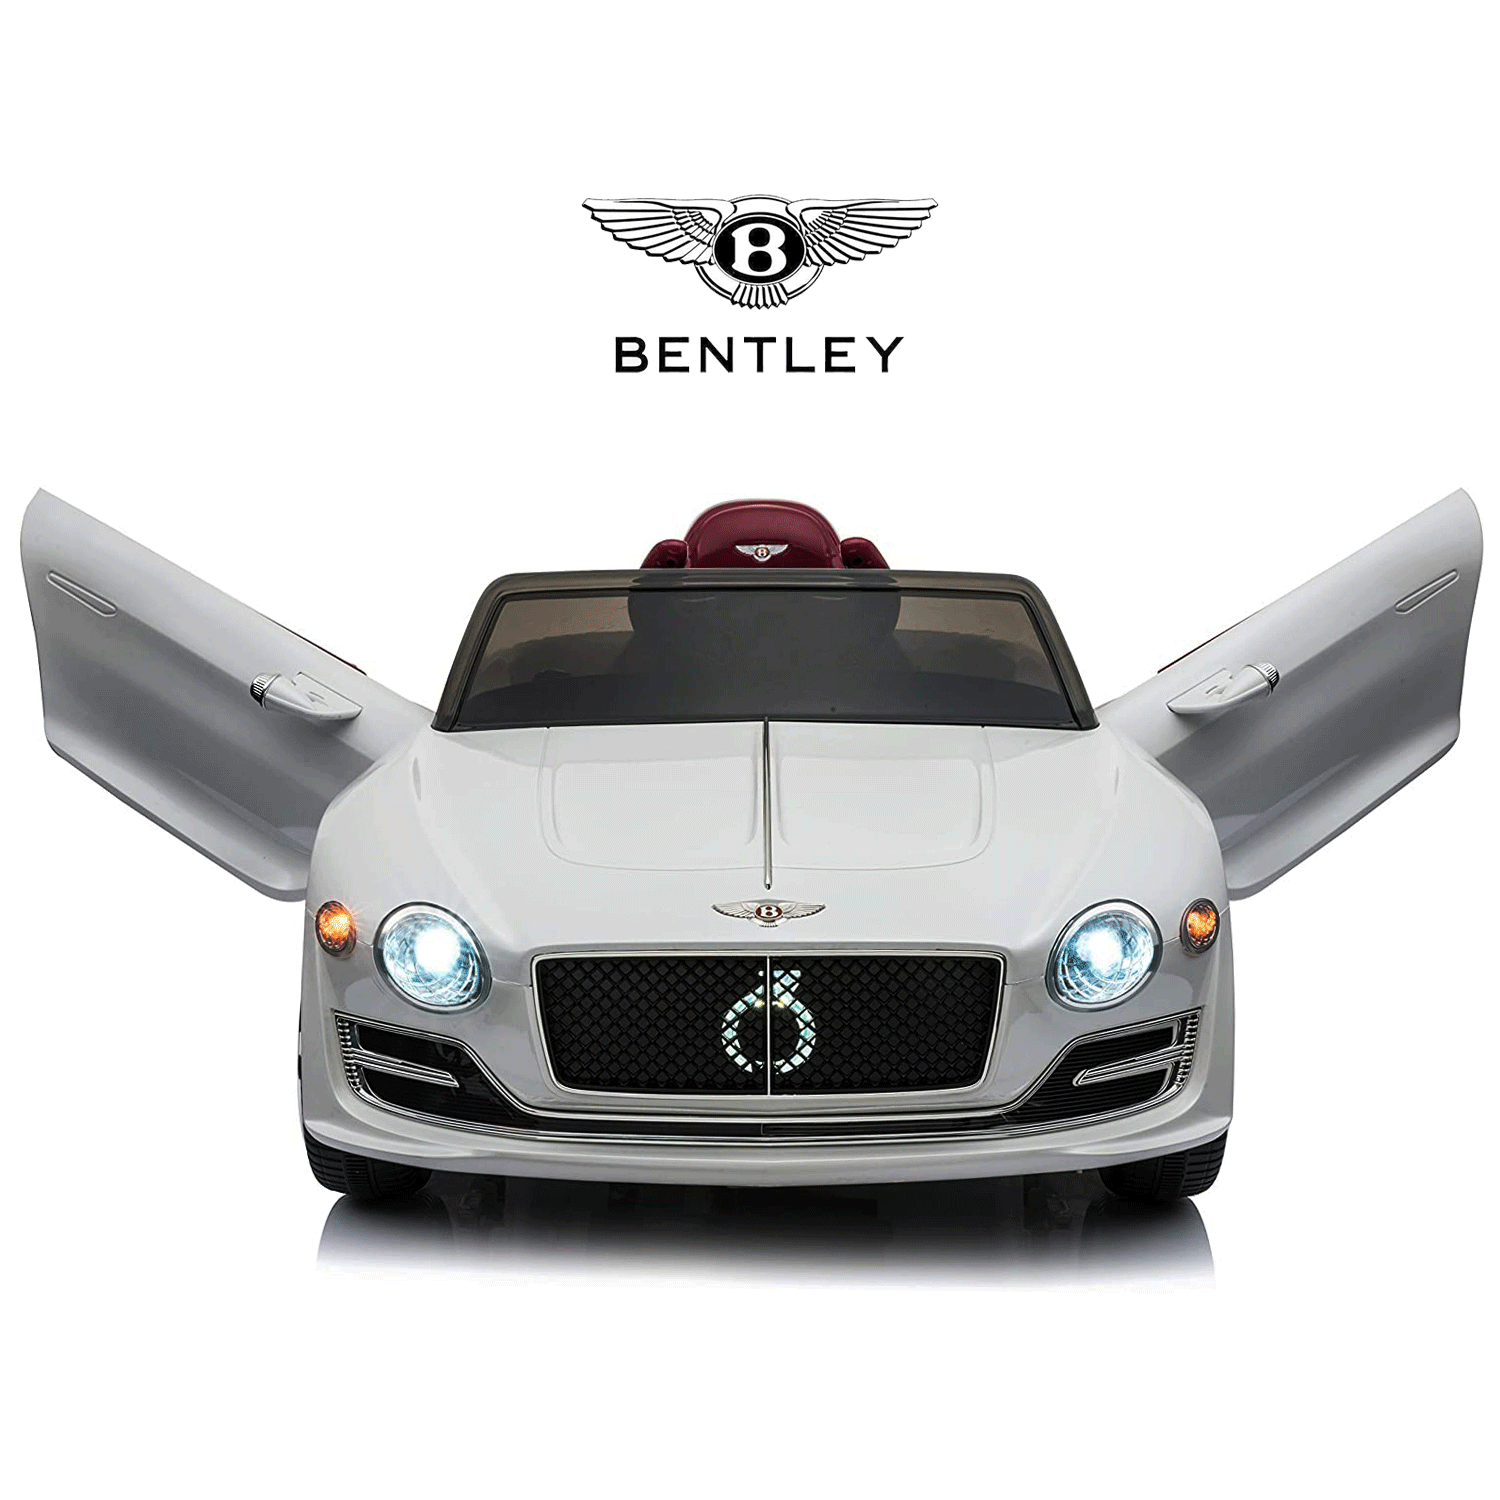 LISUEYNE Official Licensed Bentley Ride on Car,12V Electric Vehicles for Boys Girls,RC,Music,White